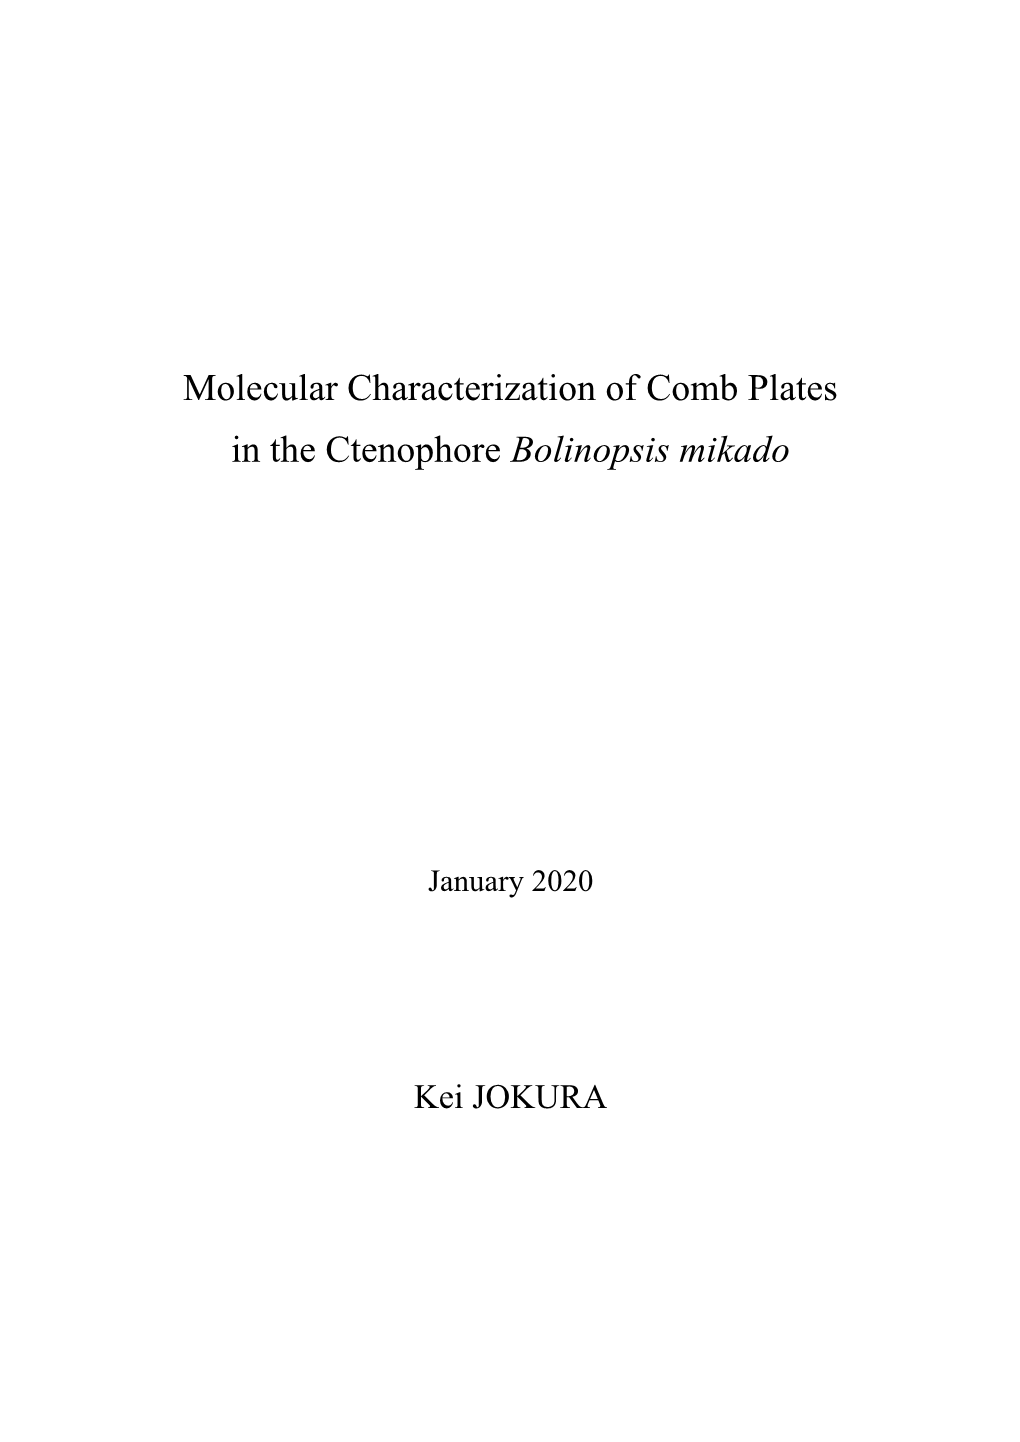 Molecular Characterization of Comb Plates in the Ctenophore Bolinopsis Mikado